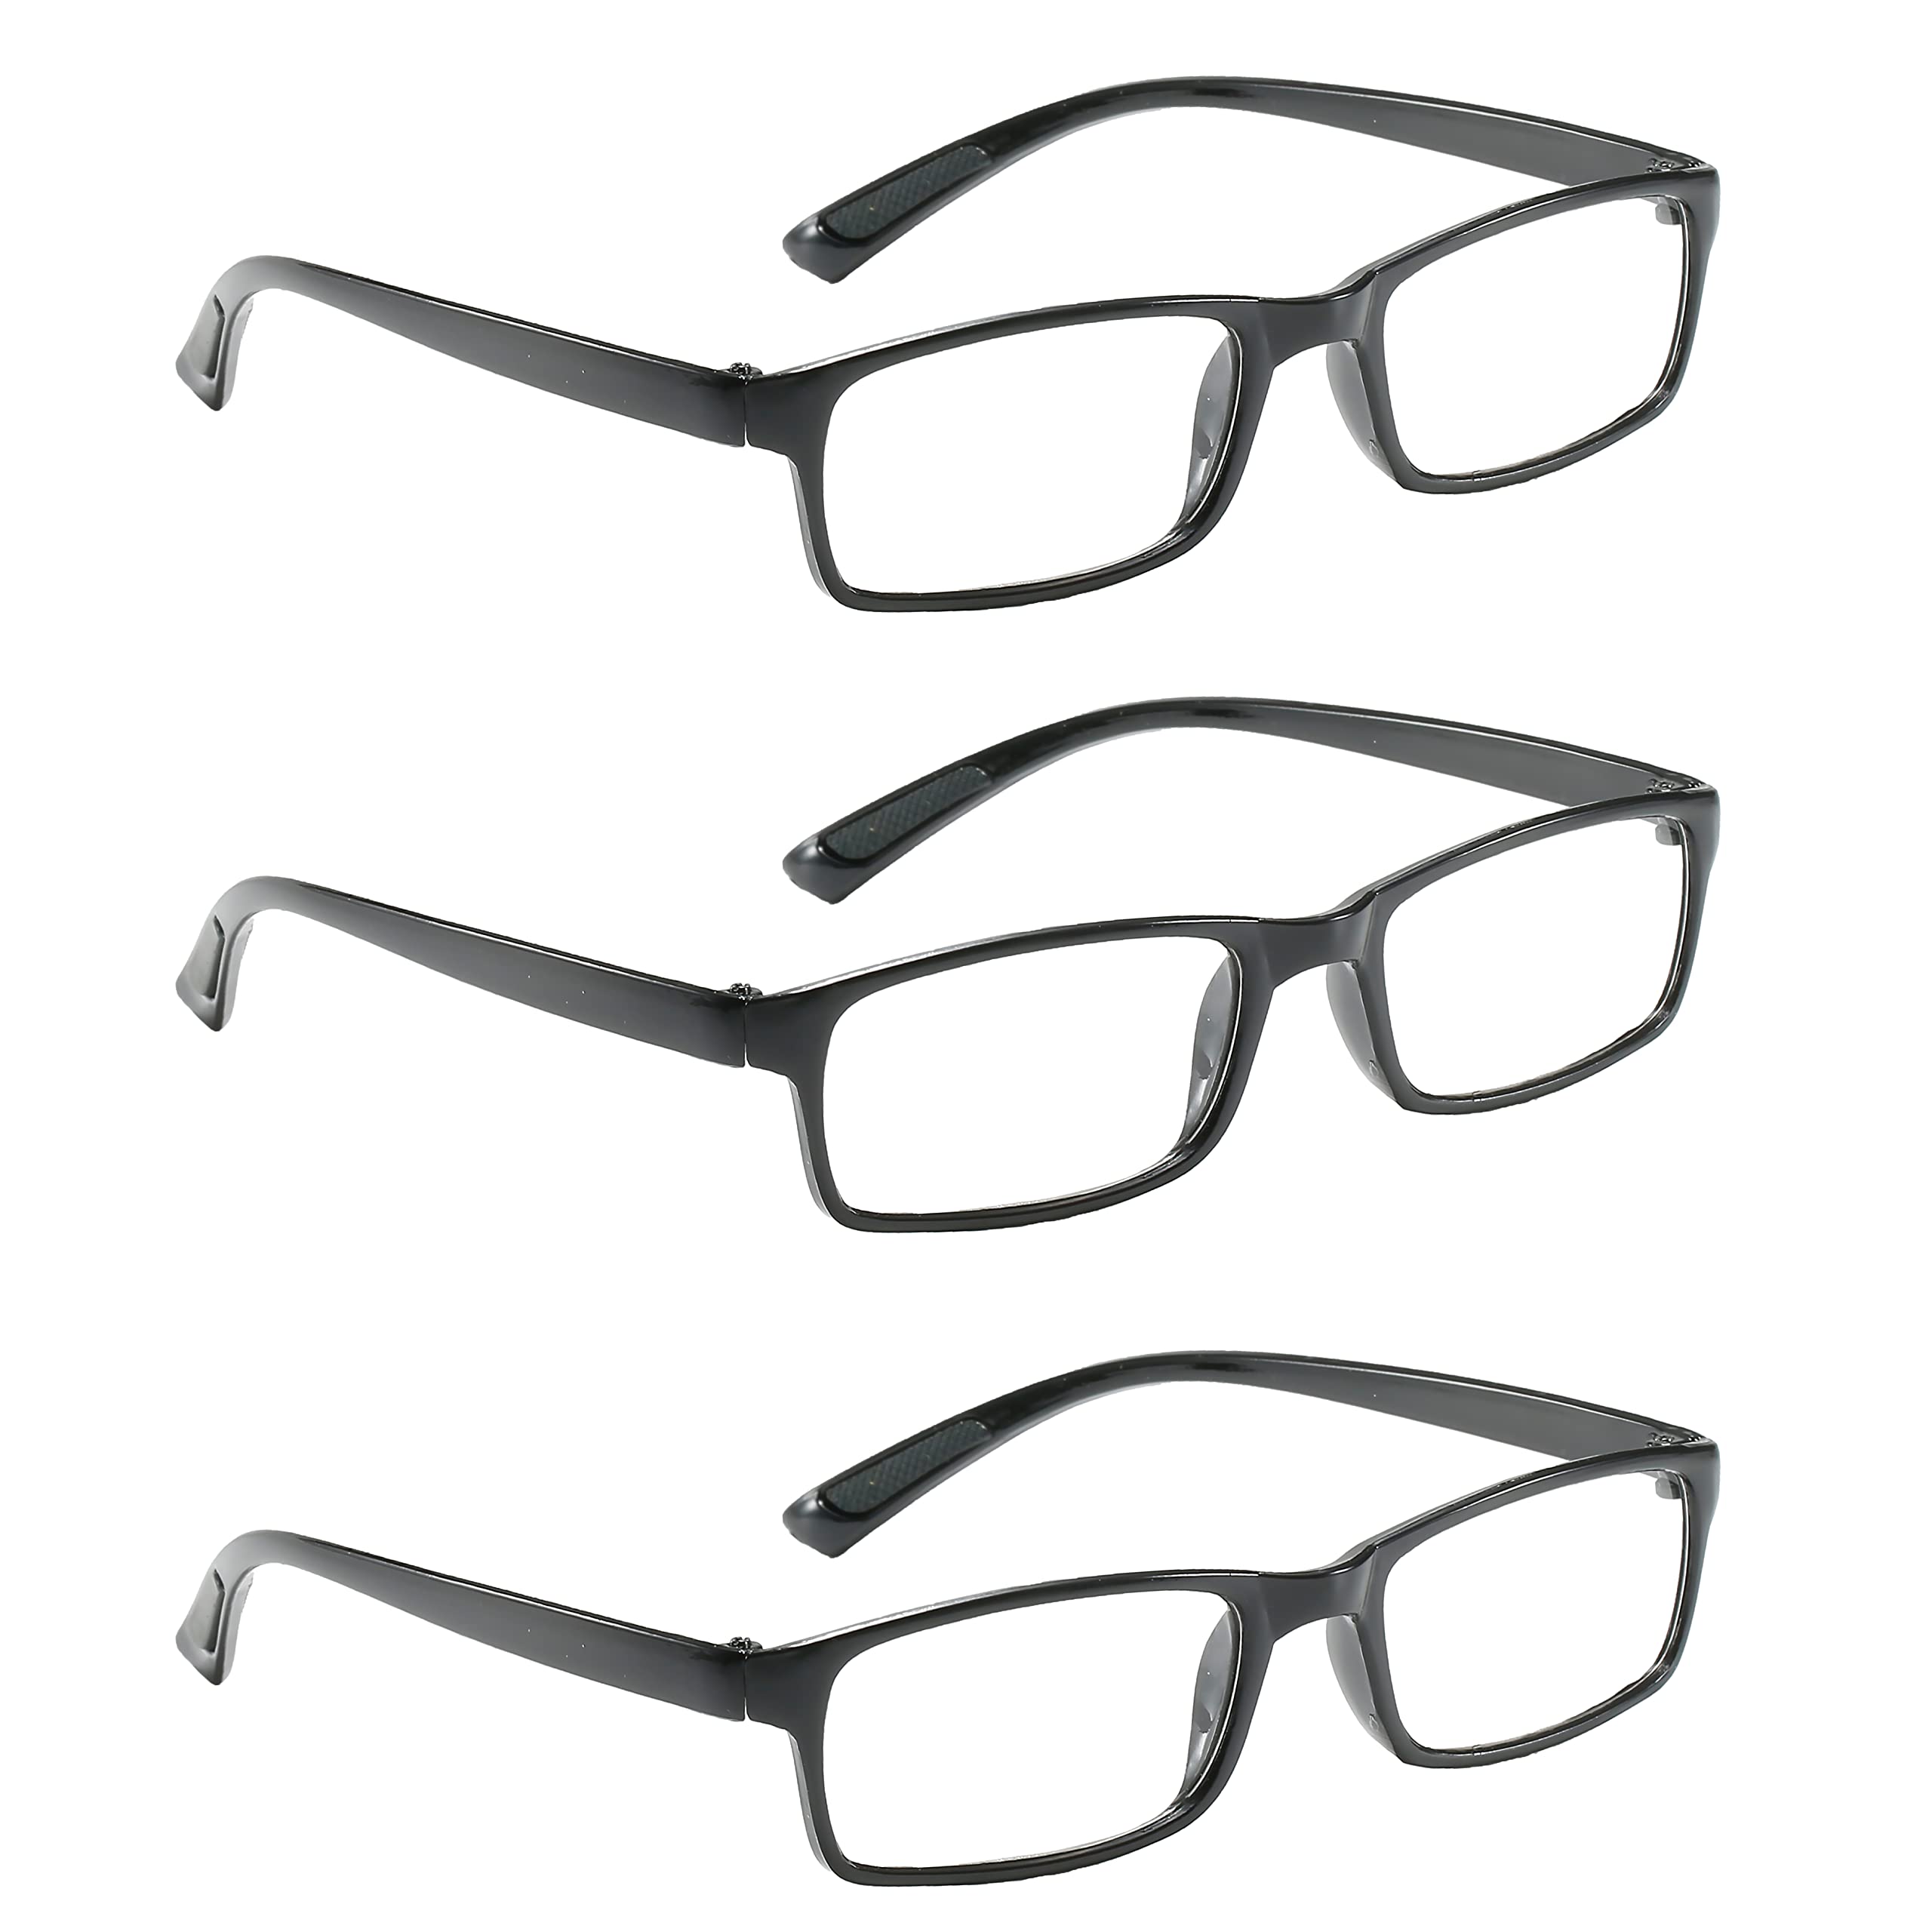 PROFLEX LIGHTWEIGHT (3 pack) impact & scratch resistant, bendy, flexible, anti-slip, unisex (mens + womens) value reading glasses, +1.0, +1.5, +2.0, +2.5, +3.0, +3.5, +4.0 - (black; classic)